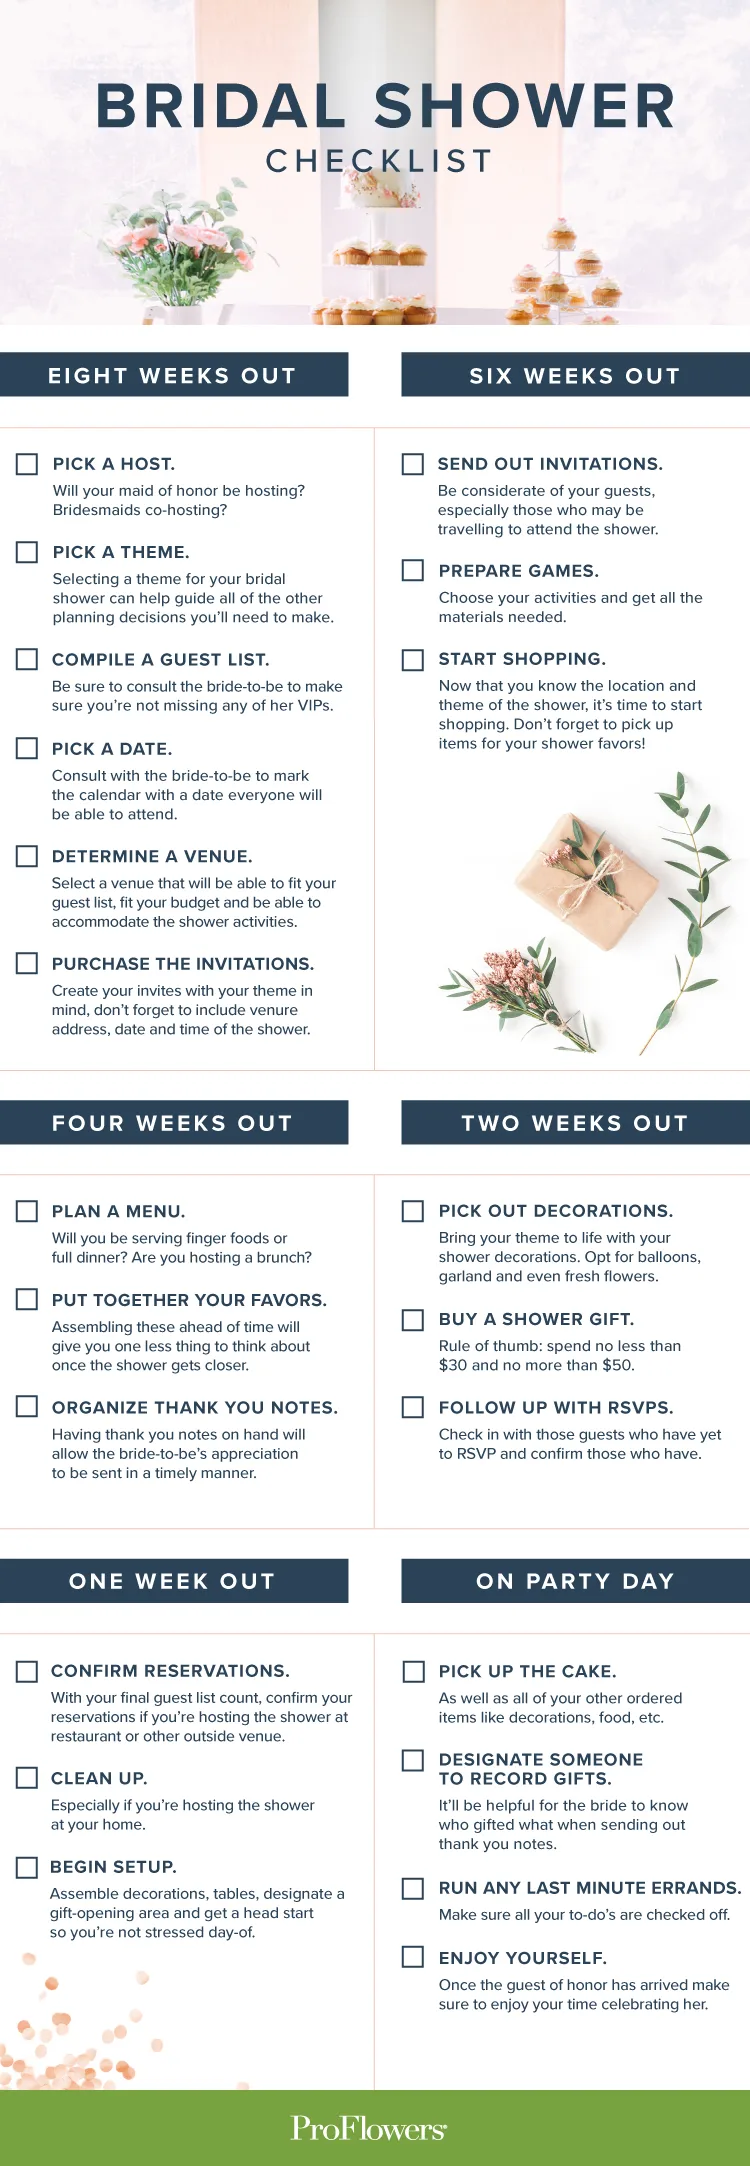 Bridal Shower Etiquette Guide and Checklist | ProFlowers